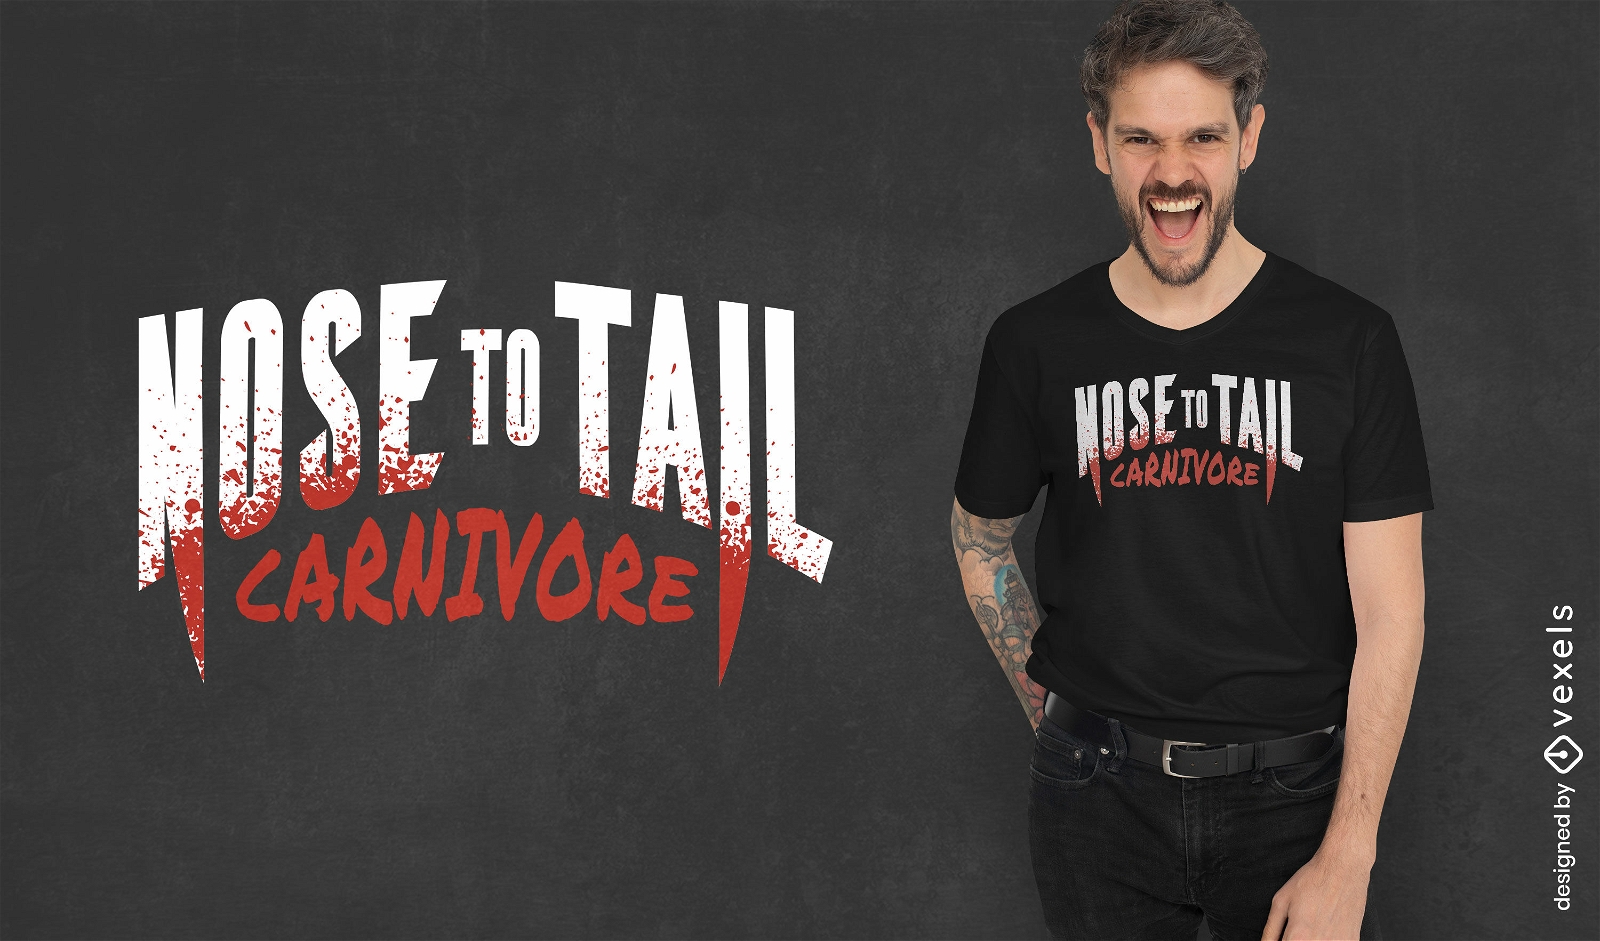 Carnivore quote t-shirt design